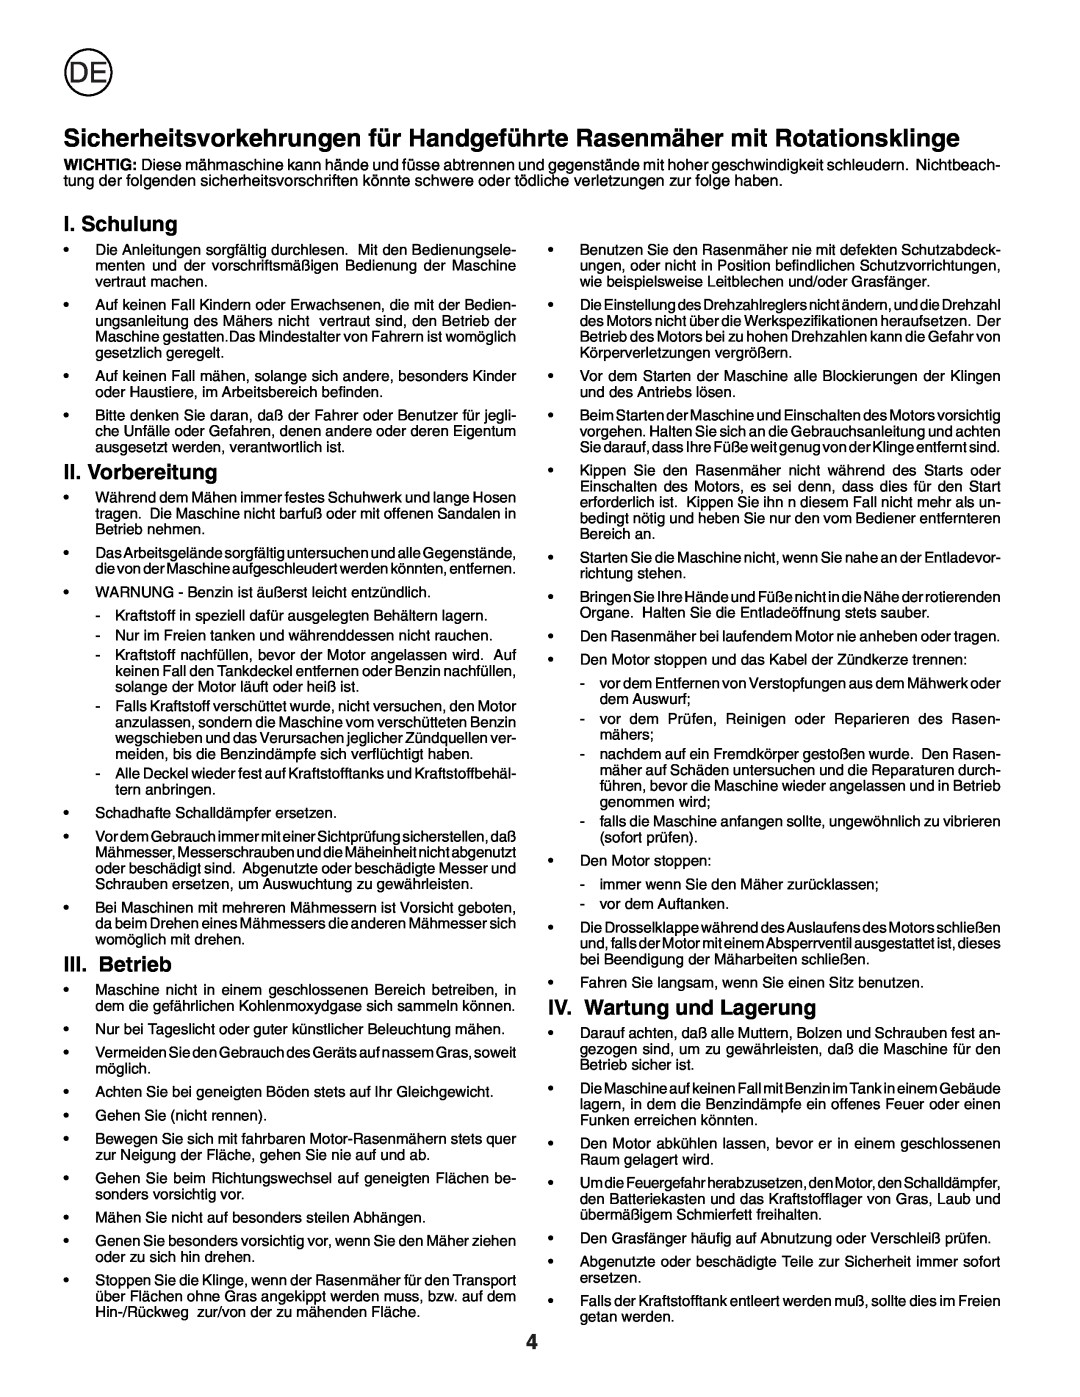 Husqvarna R152SVB instruction manual I. Schulung, II. Vorbereitung, III. Betrieb, IV. Wartung und Lagerung 